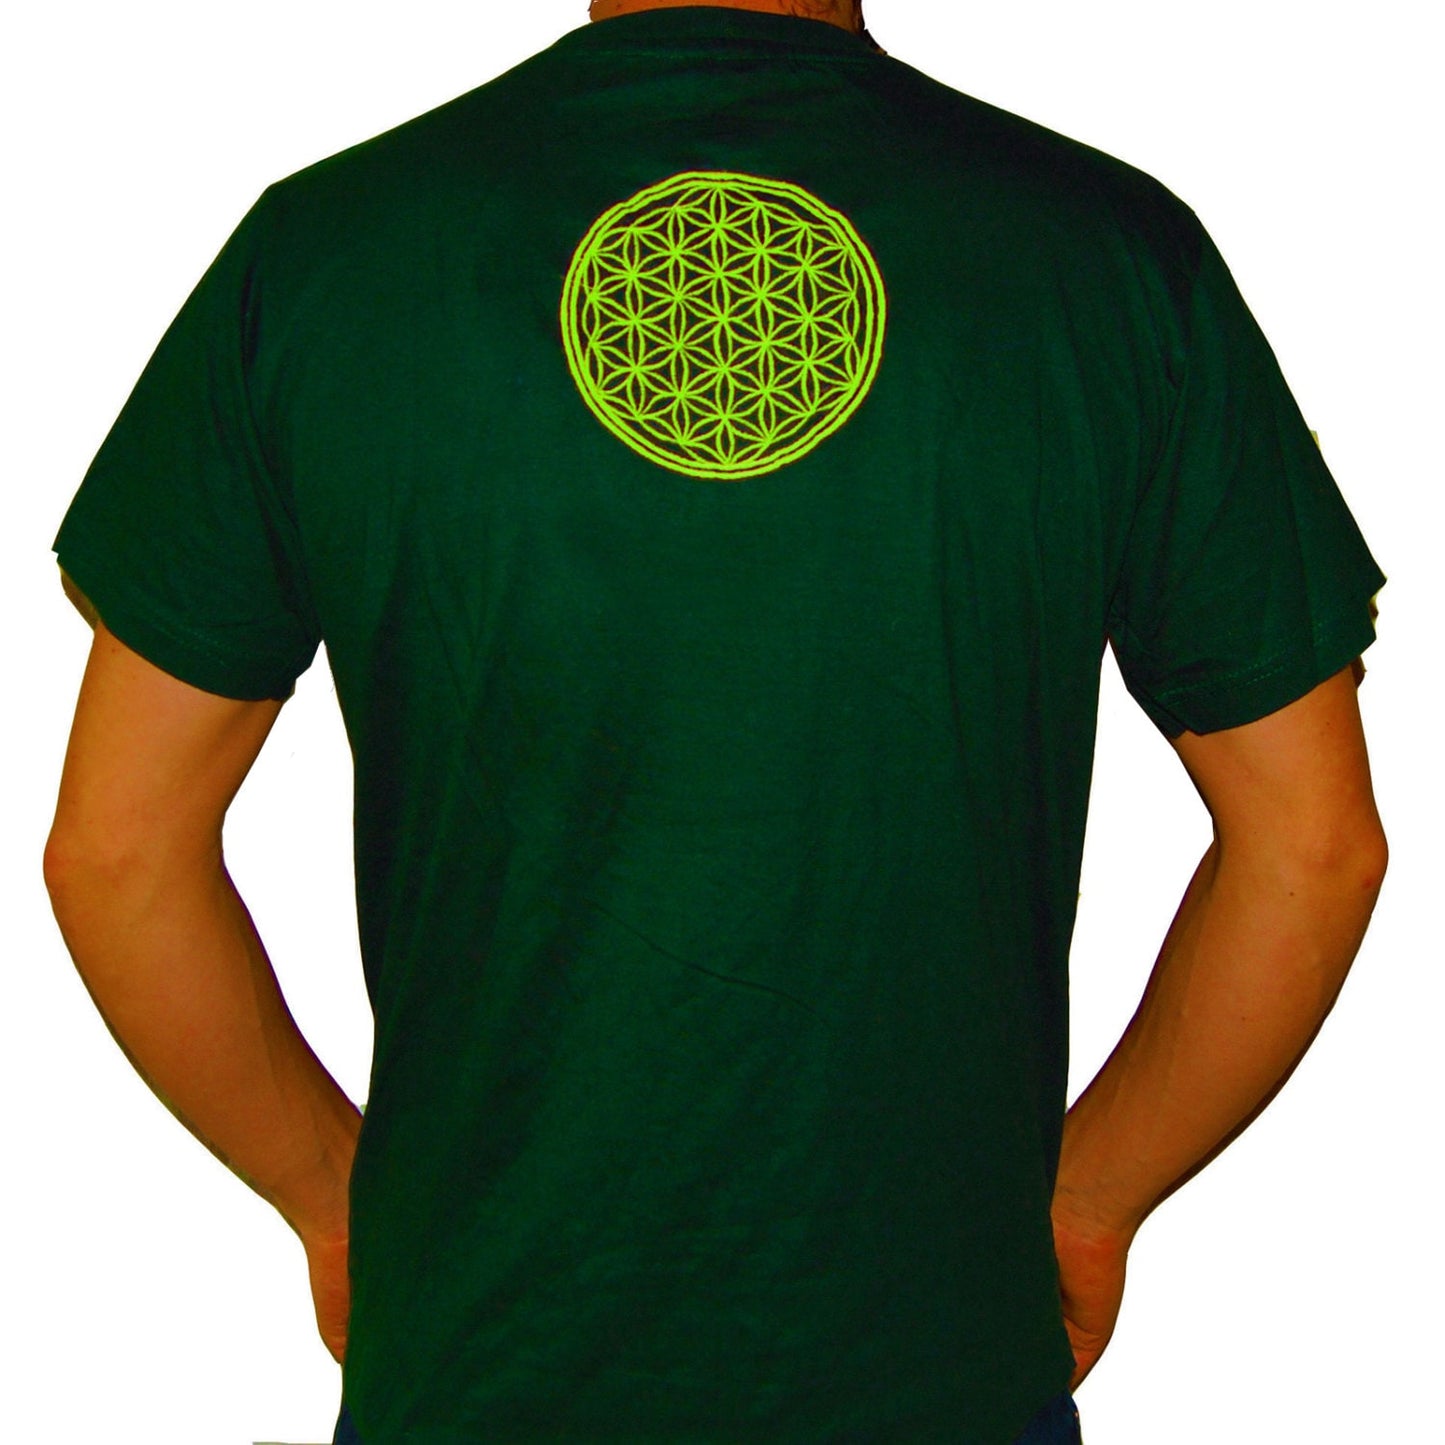 Flower of Life DNA Healing T-Shirt - sacred healing geometry crop circle handmade embroidery no print